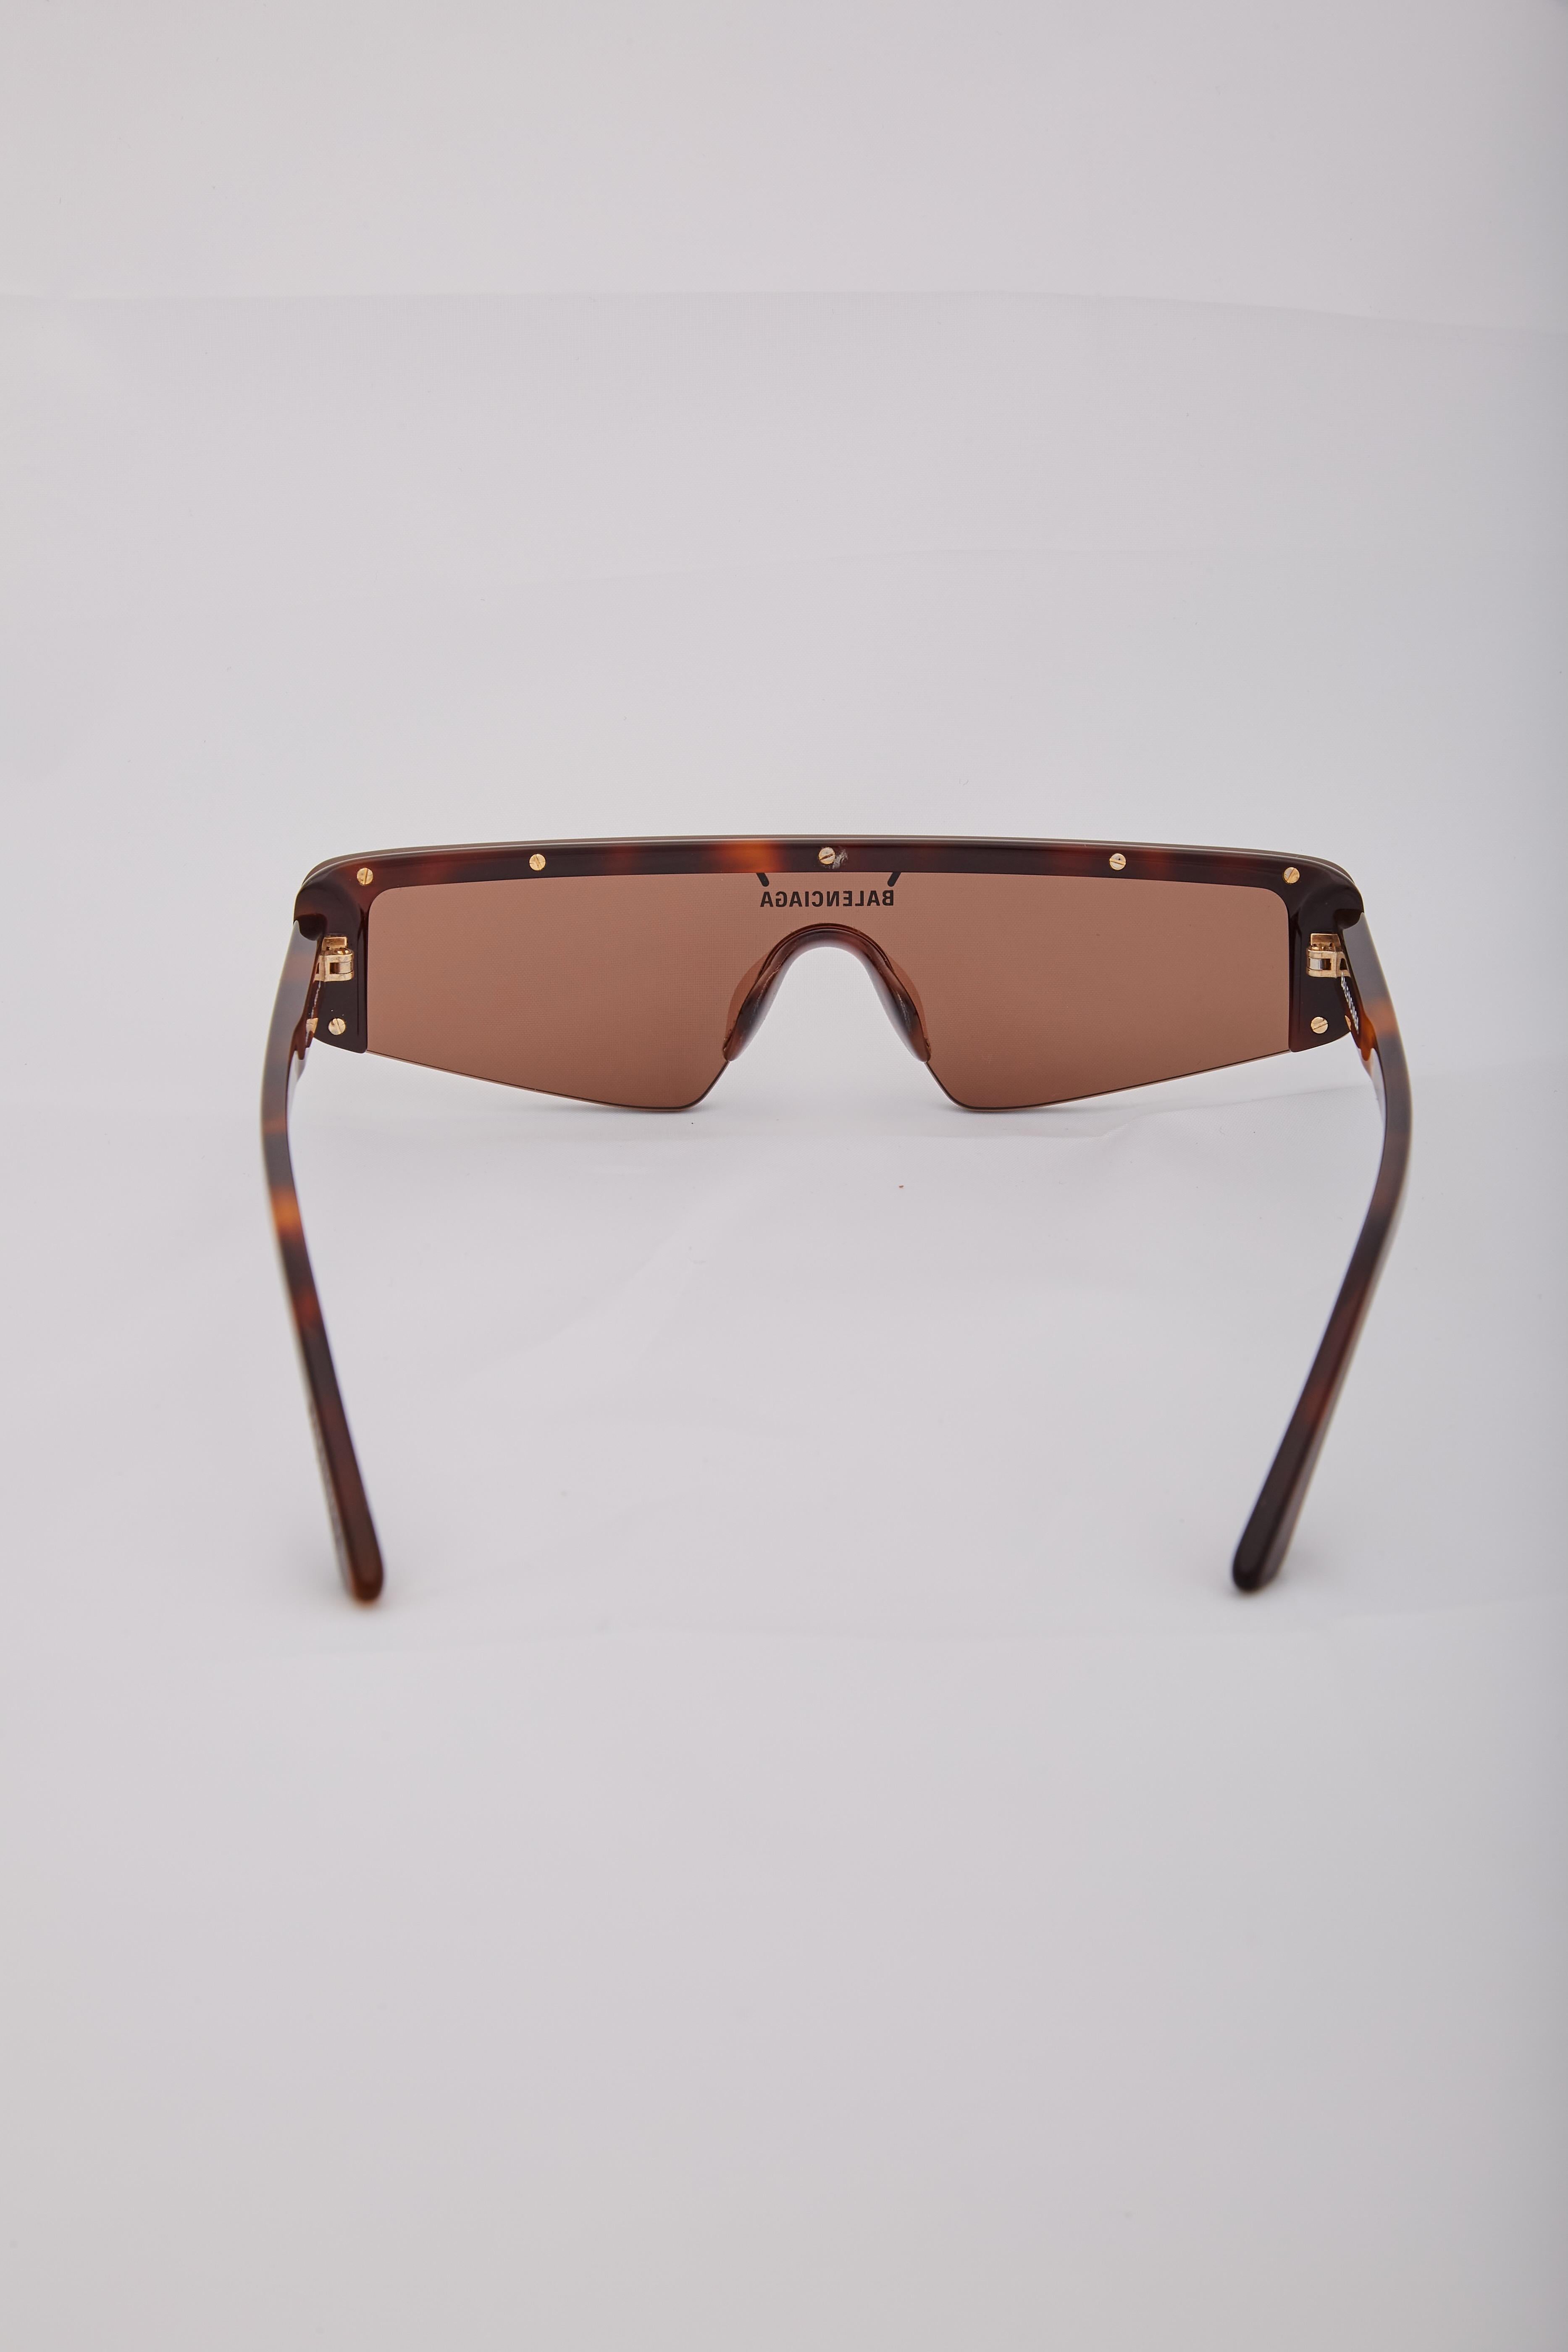 Balenciaga Tortoise Ski Rectangle Sunglasses For Sale 1